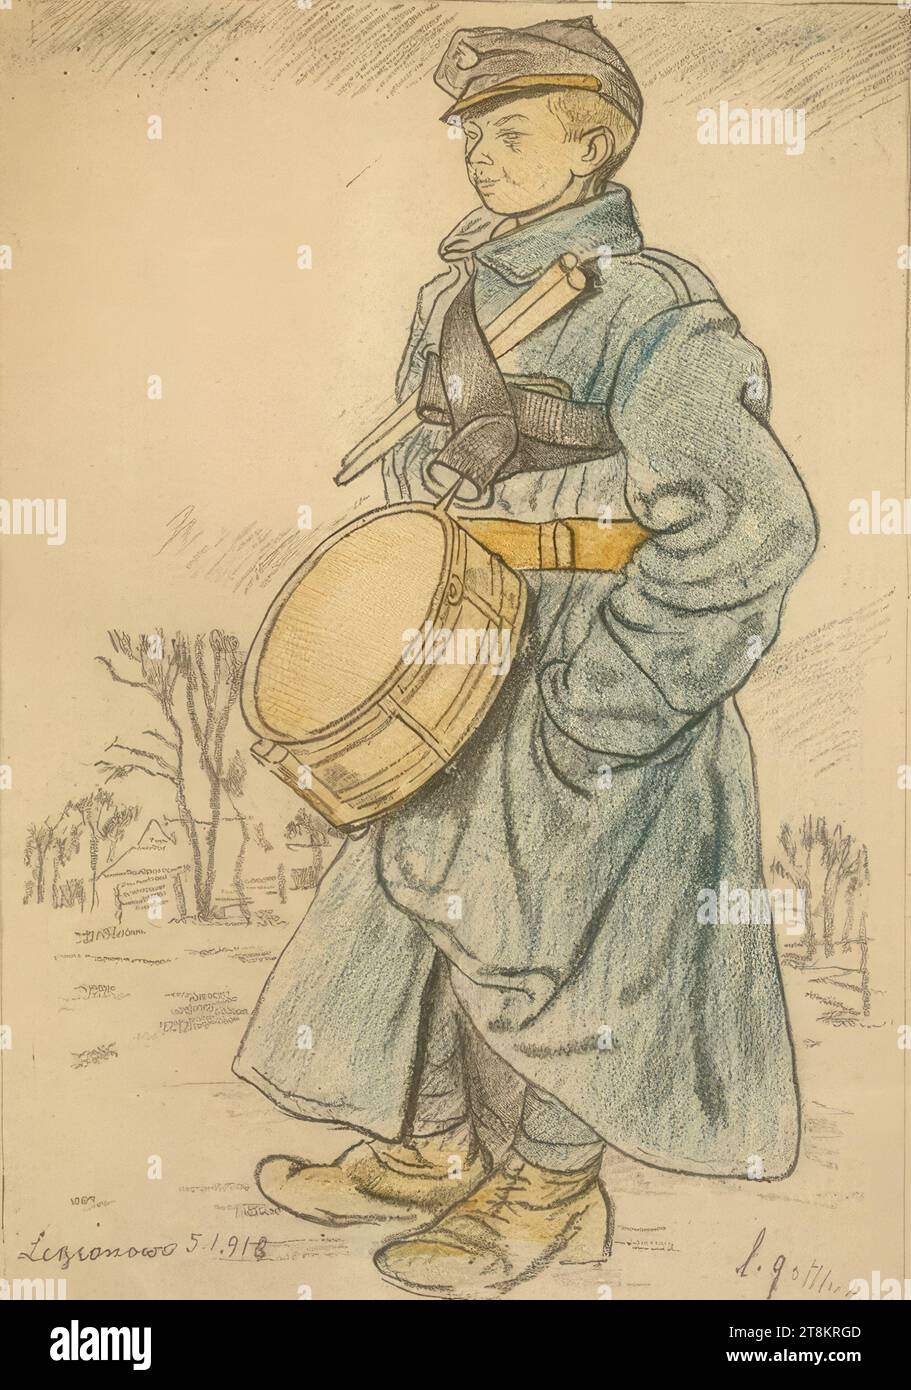 Legionowo - Tambour from the First World War, Leopold Gottlieb, Drohobycz 1879 - 1934 Paris, 1918, print, color lithograph, sheet: 44.8 x 31.4 cm, l.l. 'Legionowo Stock Photo